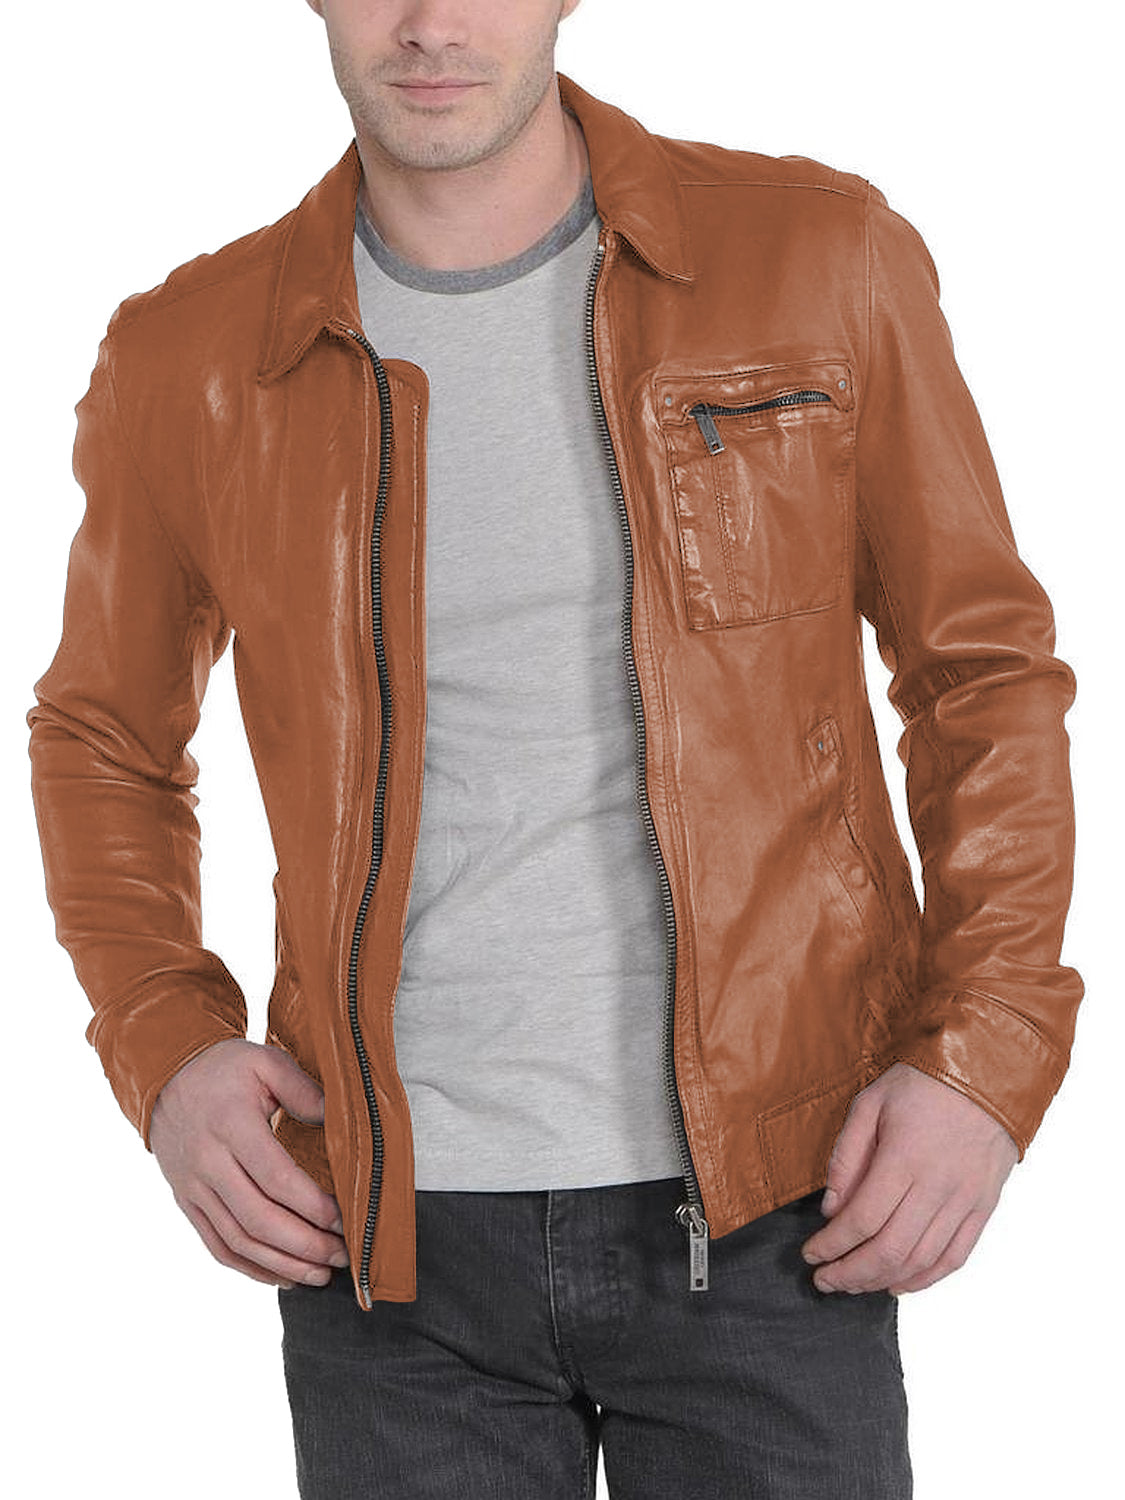 Leather Jackets Hub Mens Genuine Lambskin Leather Jacket (Black, Aviator Jacket) - 1501221